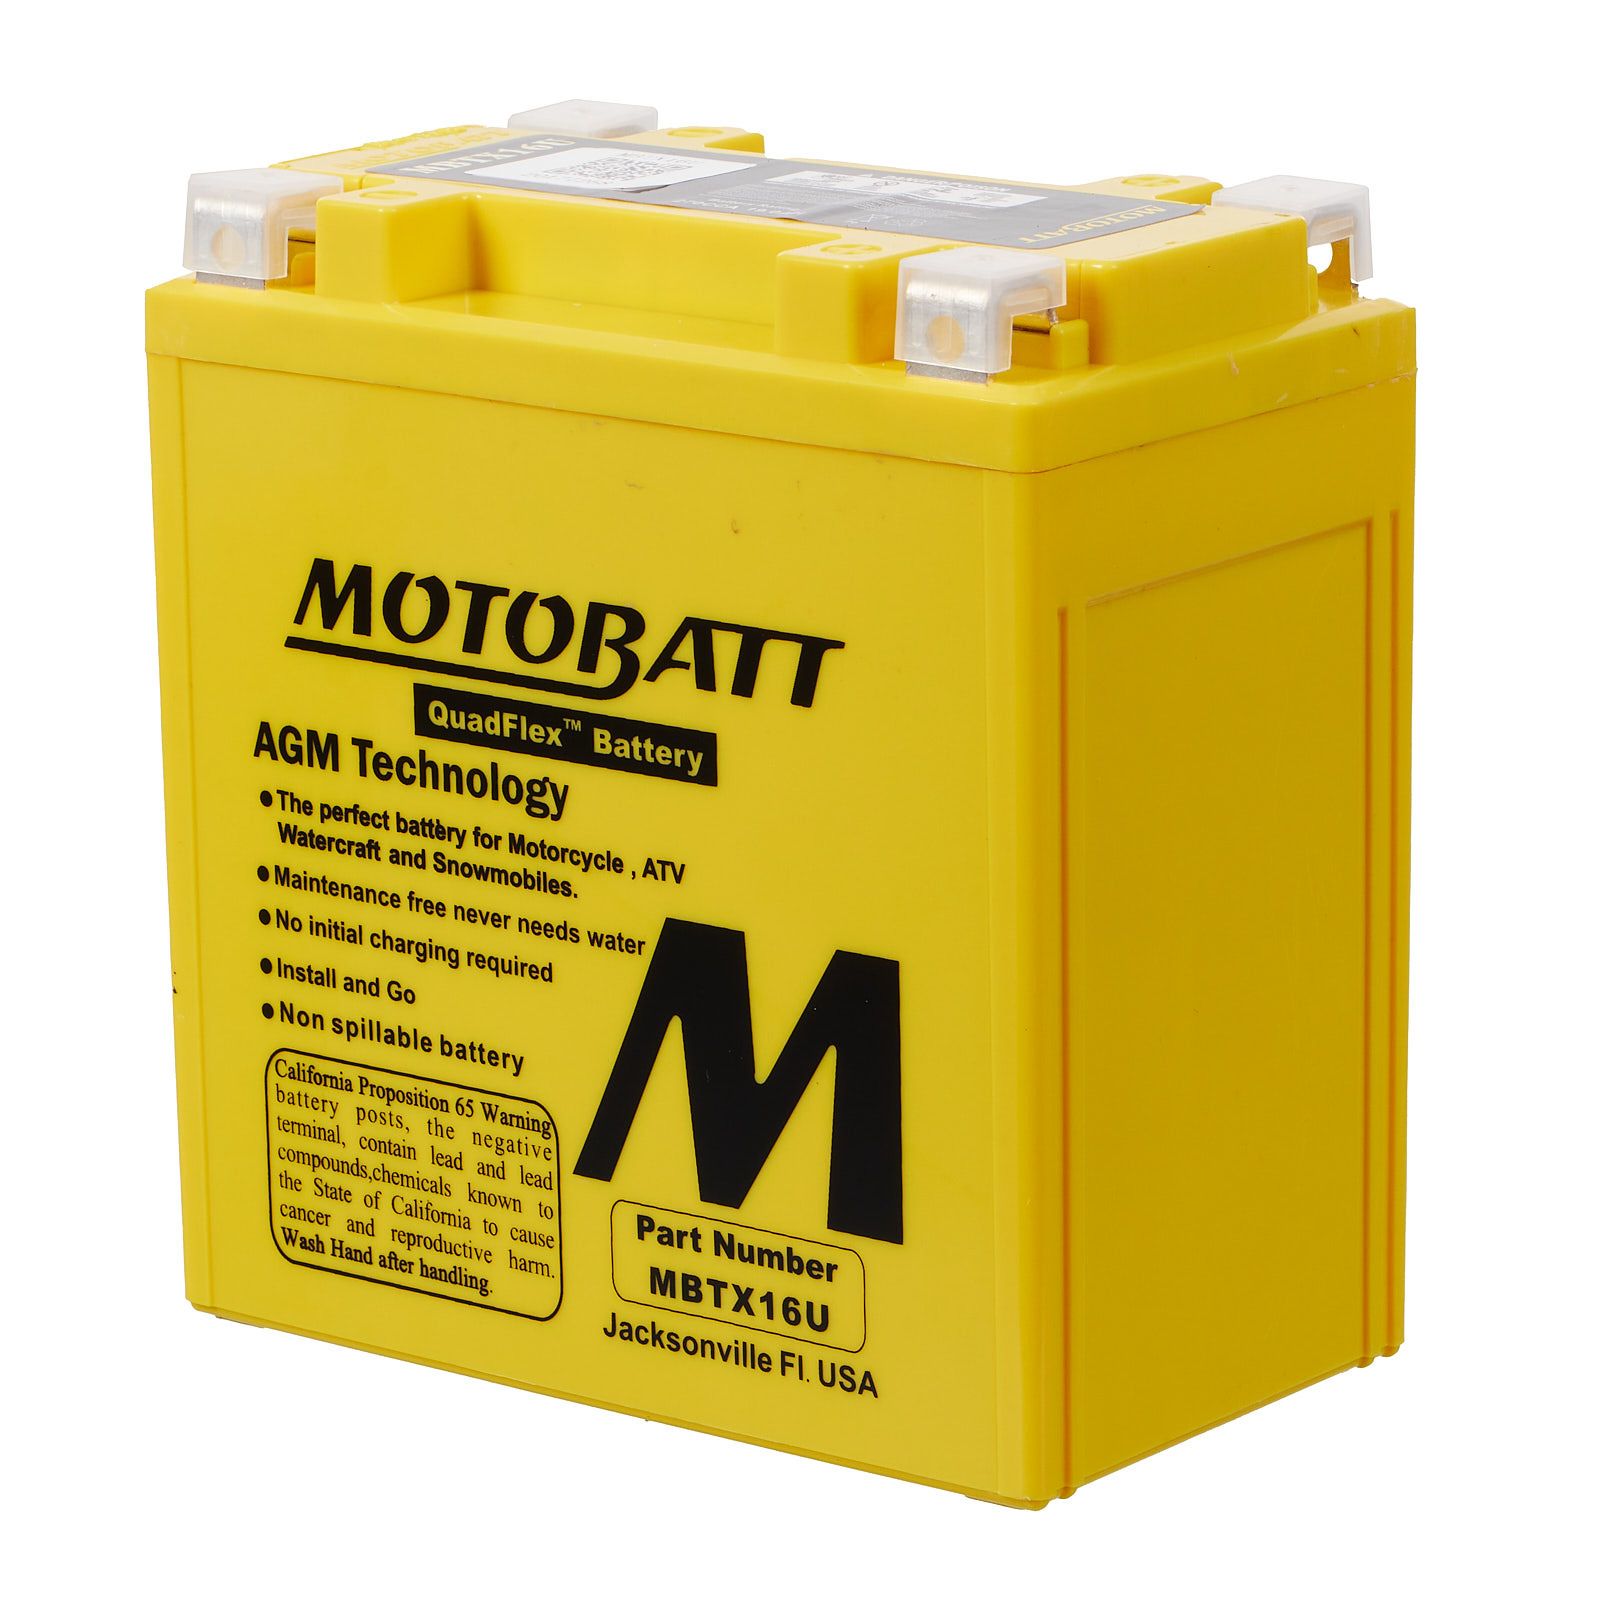 New MOTOBATT Quadflex AGM Battery #MBTX16U